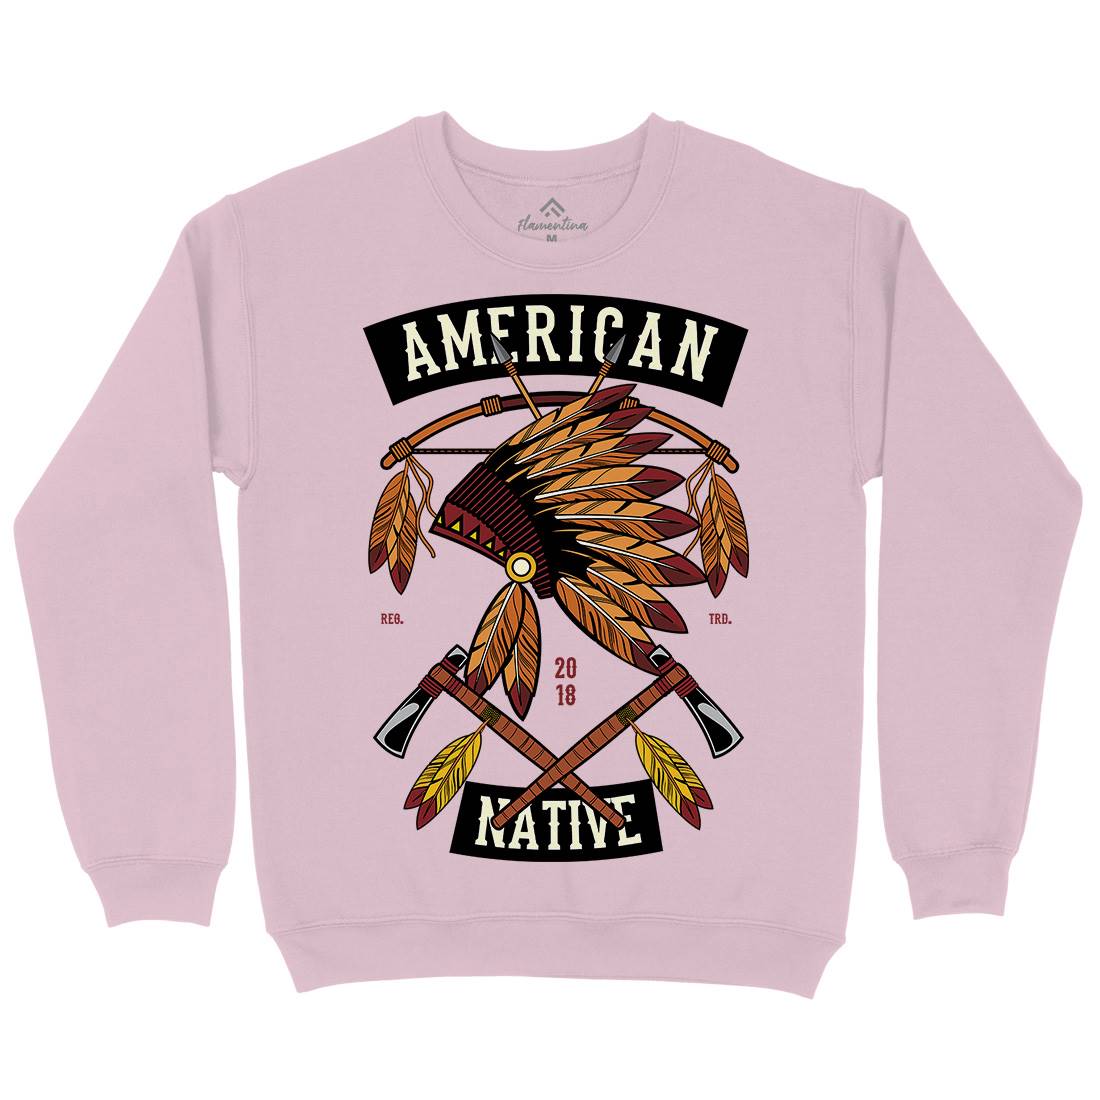 American Native Kids Crew Neck Sweatshirt American C303